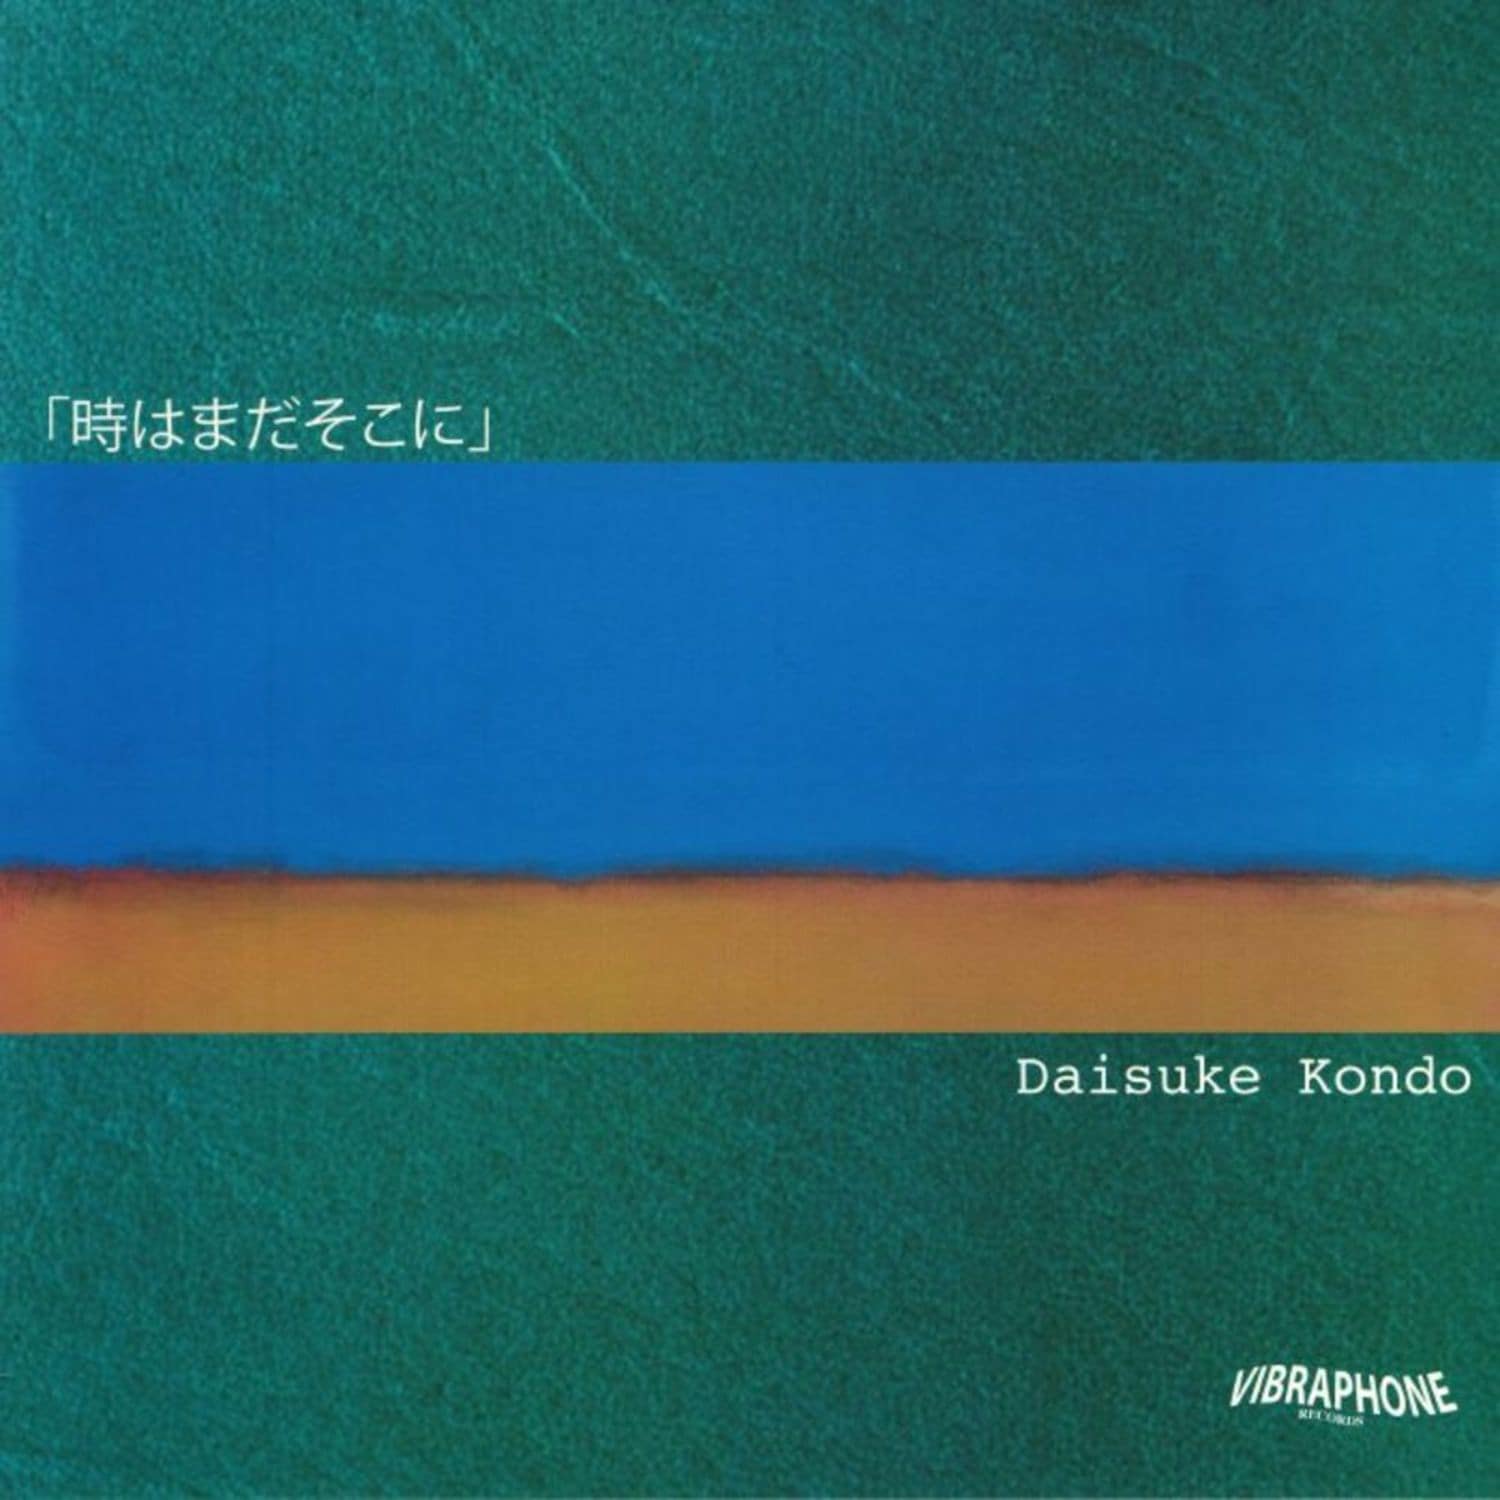 Daisuke Kondo - STUCK IN A TIME WARP